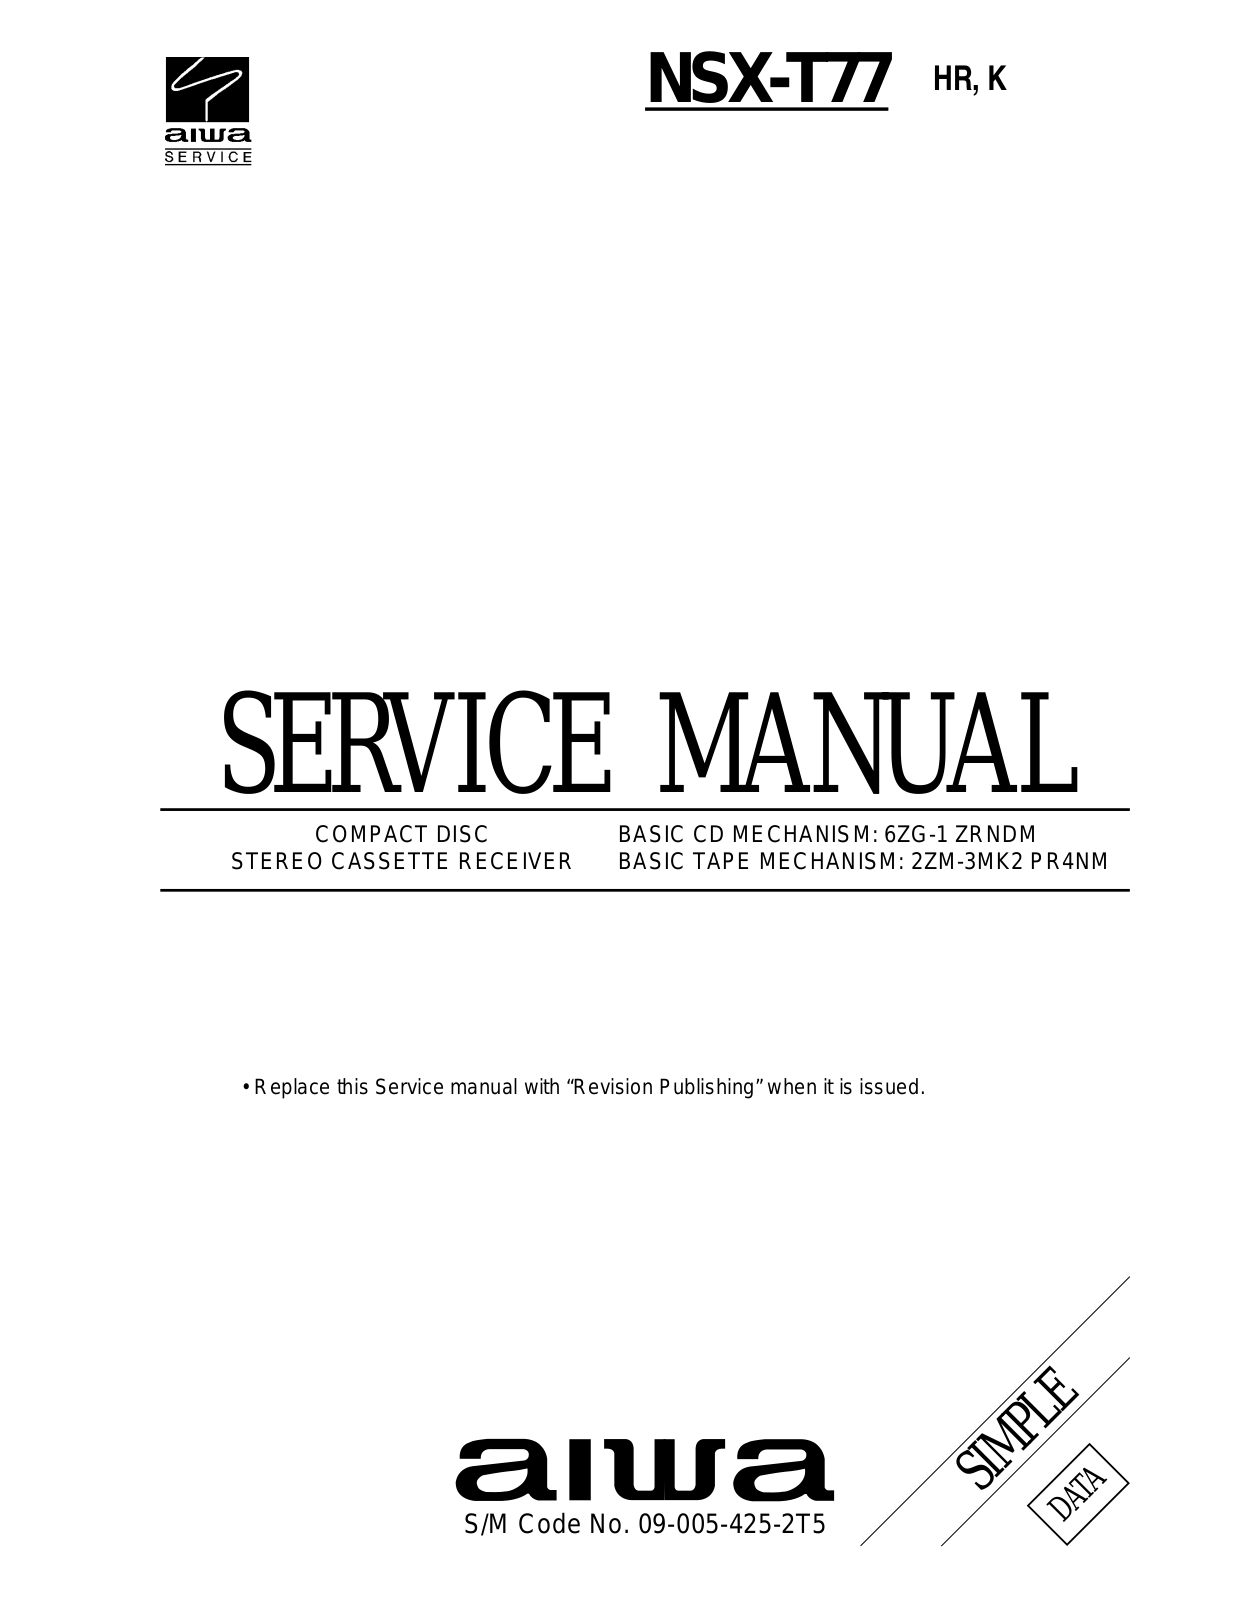 Aiwa NSX-T77 Service Manual